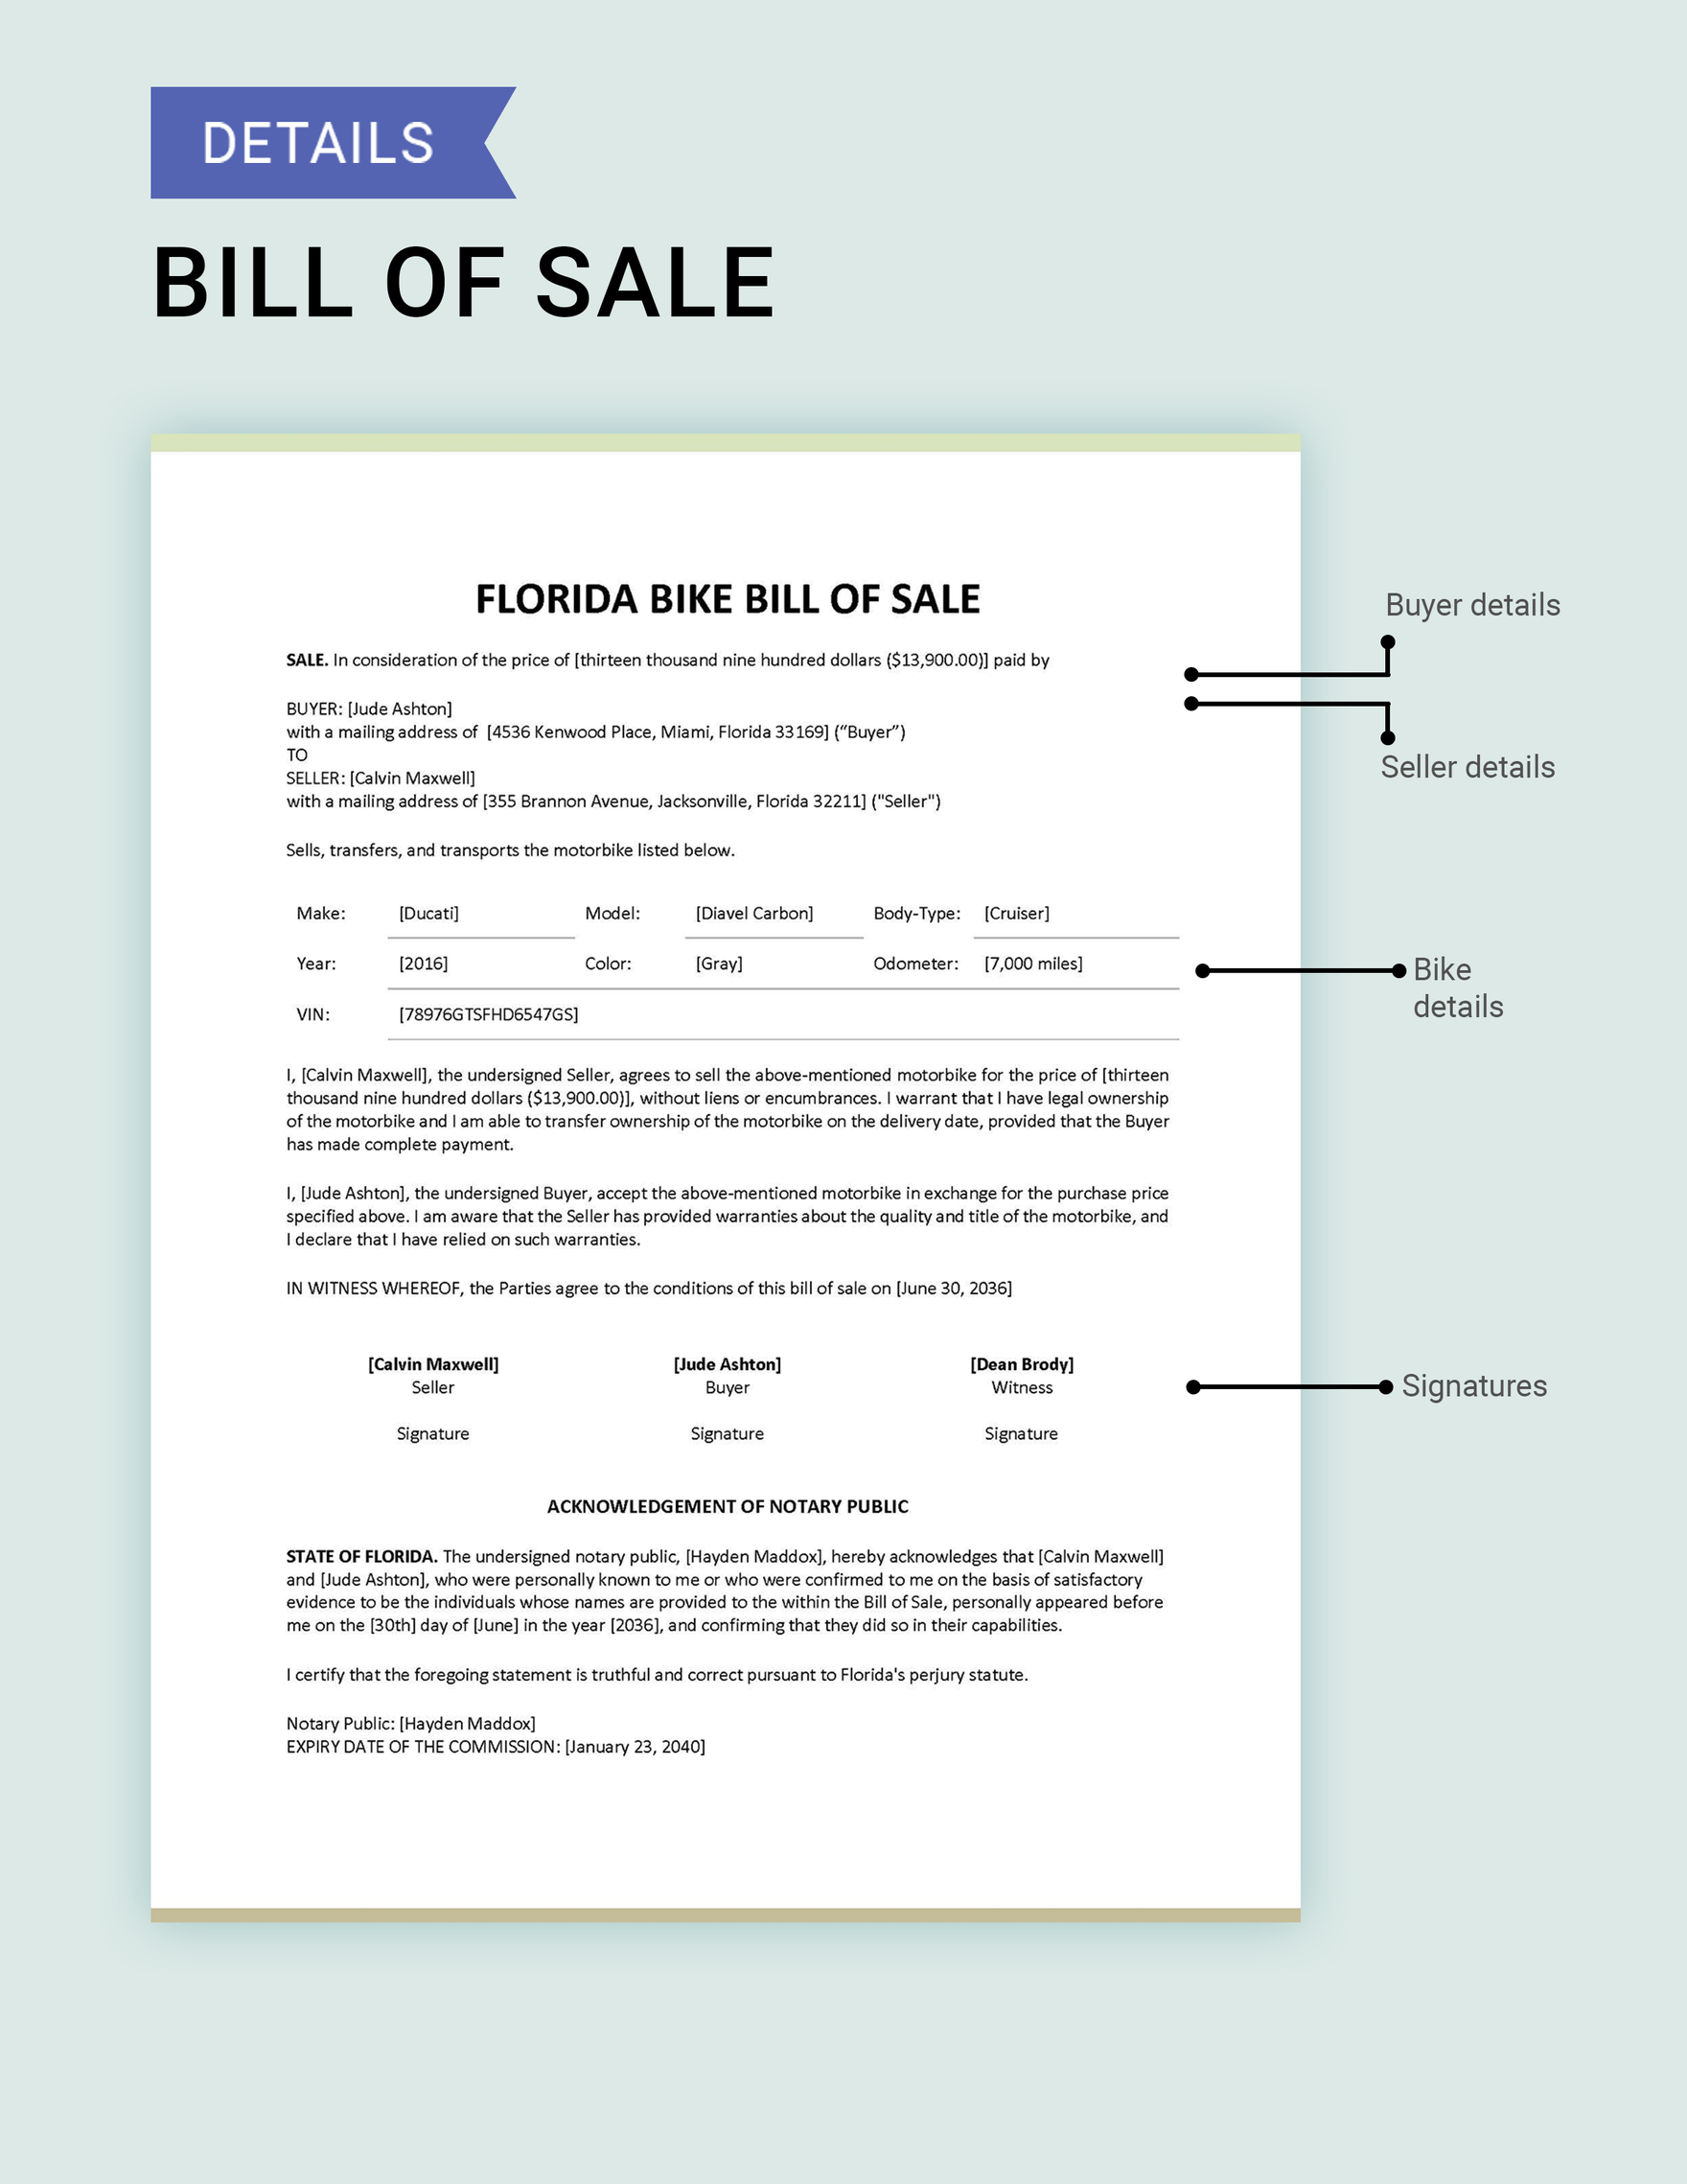 Florida Bike/ Bicycle Bill of Sale Template